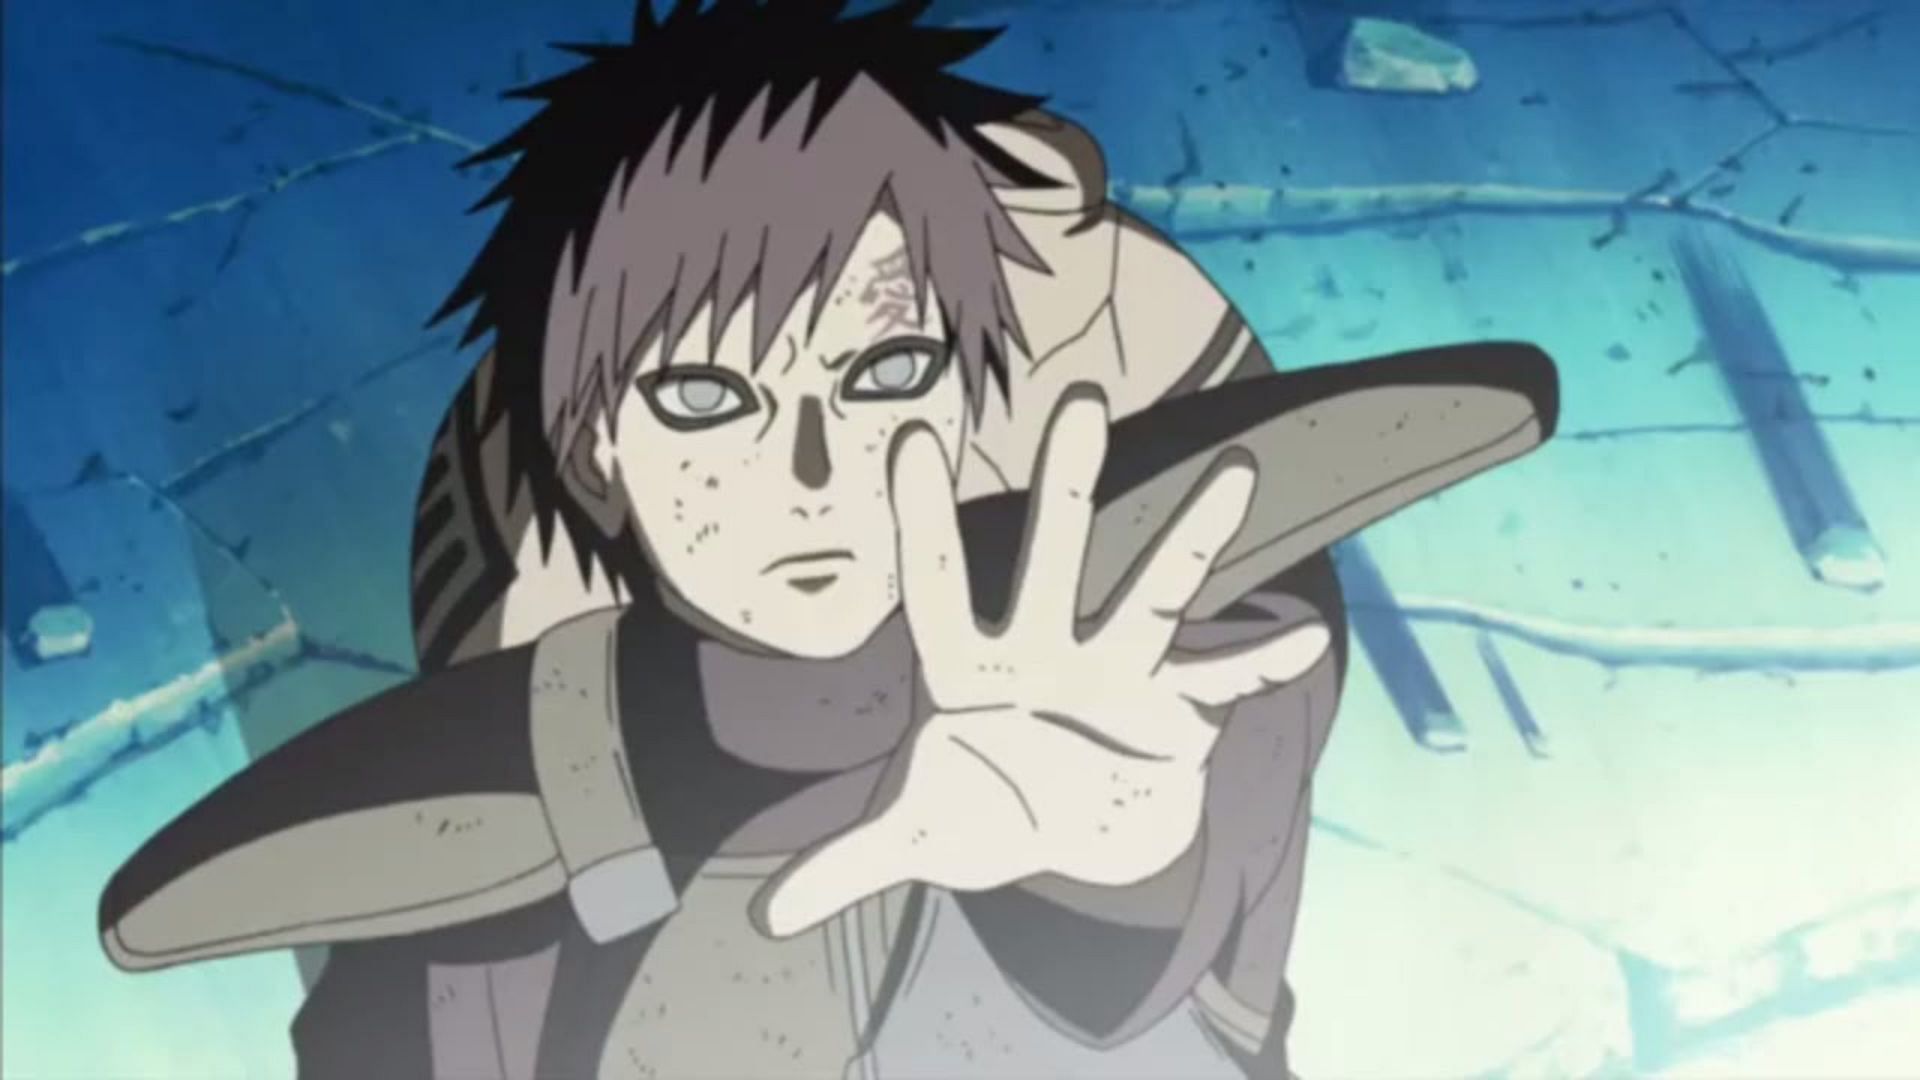 Gaara as seen in Naruto: Shippuden (Image via Studio Pierrot)